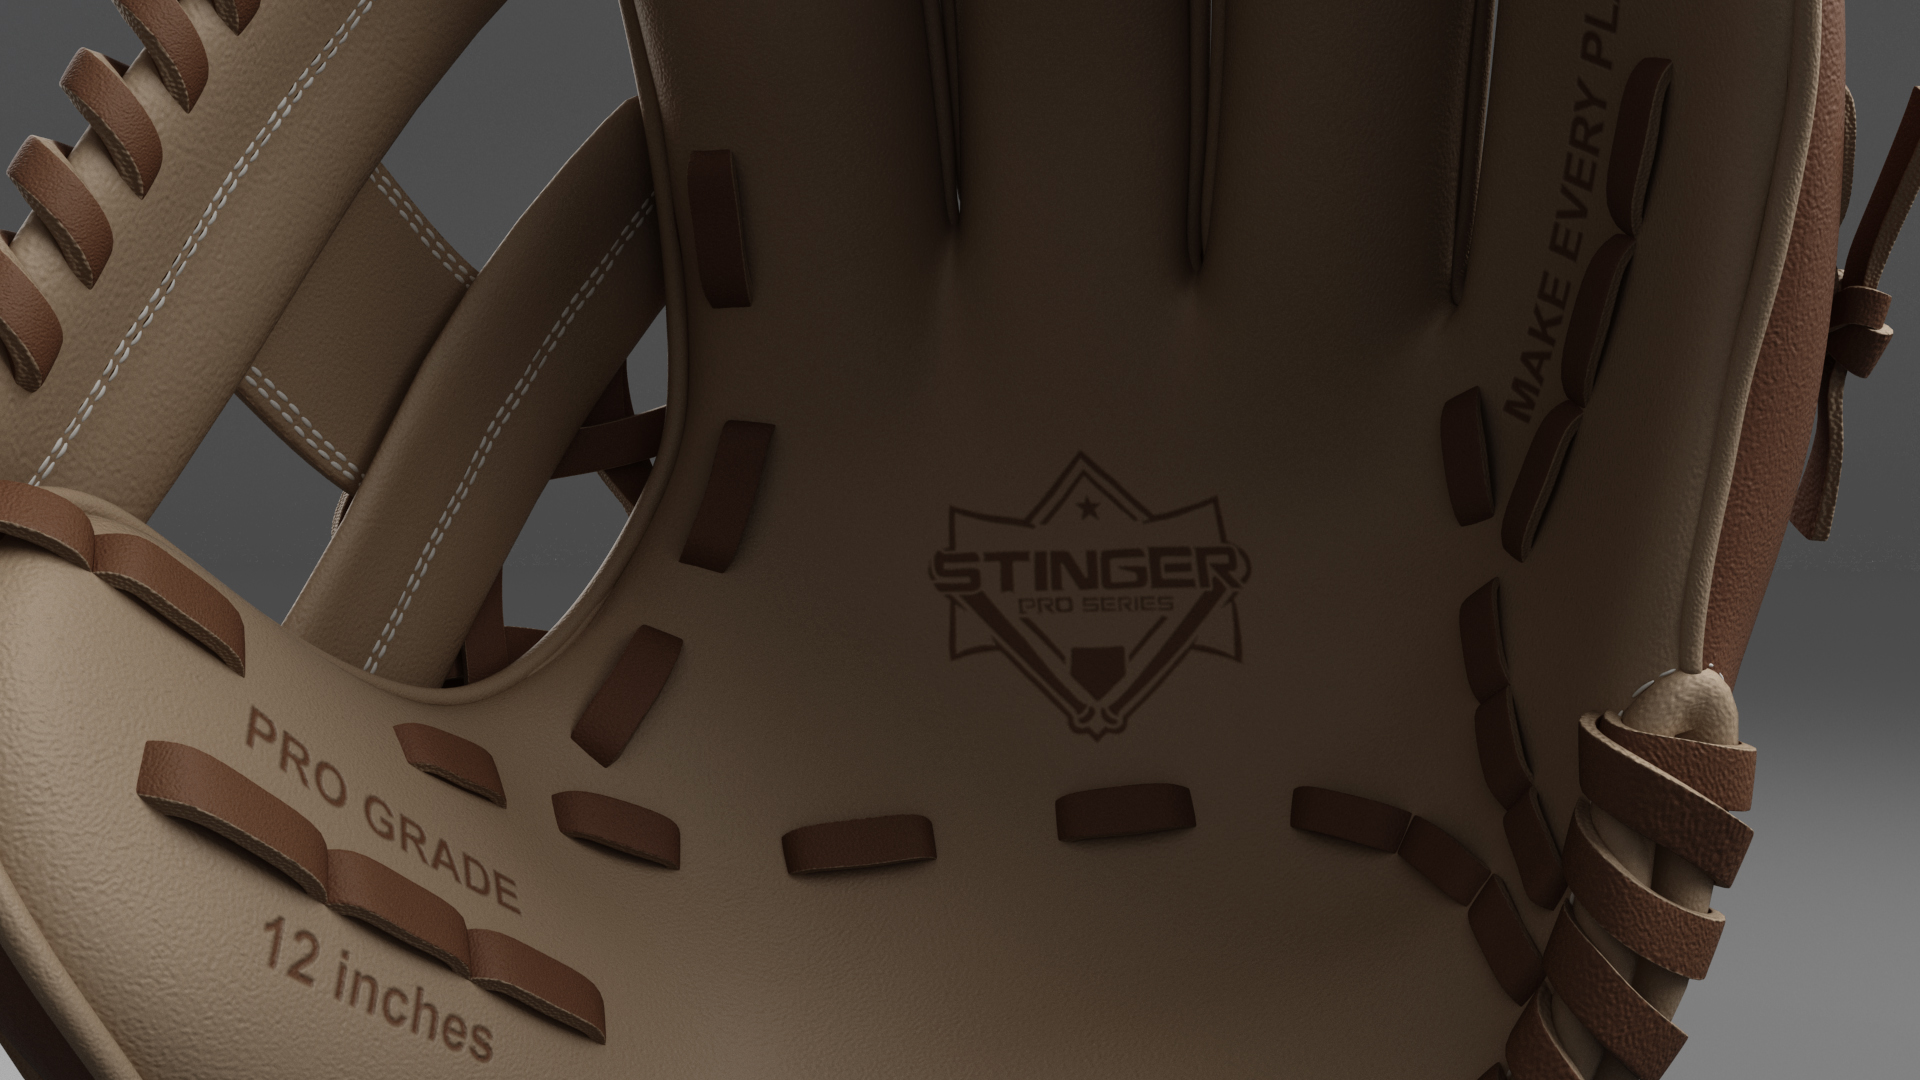 Baseball Glove Brown Render